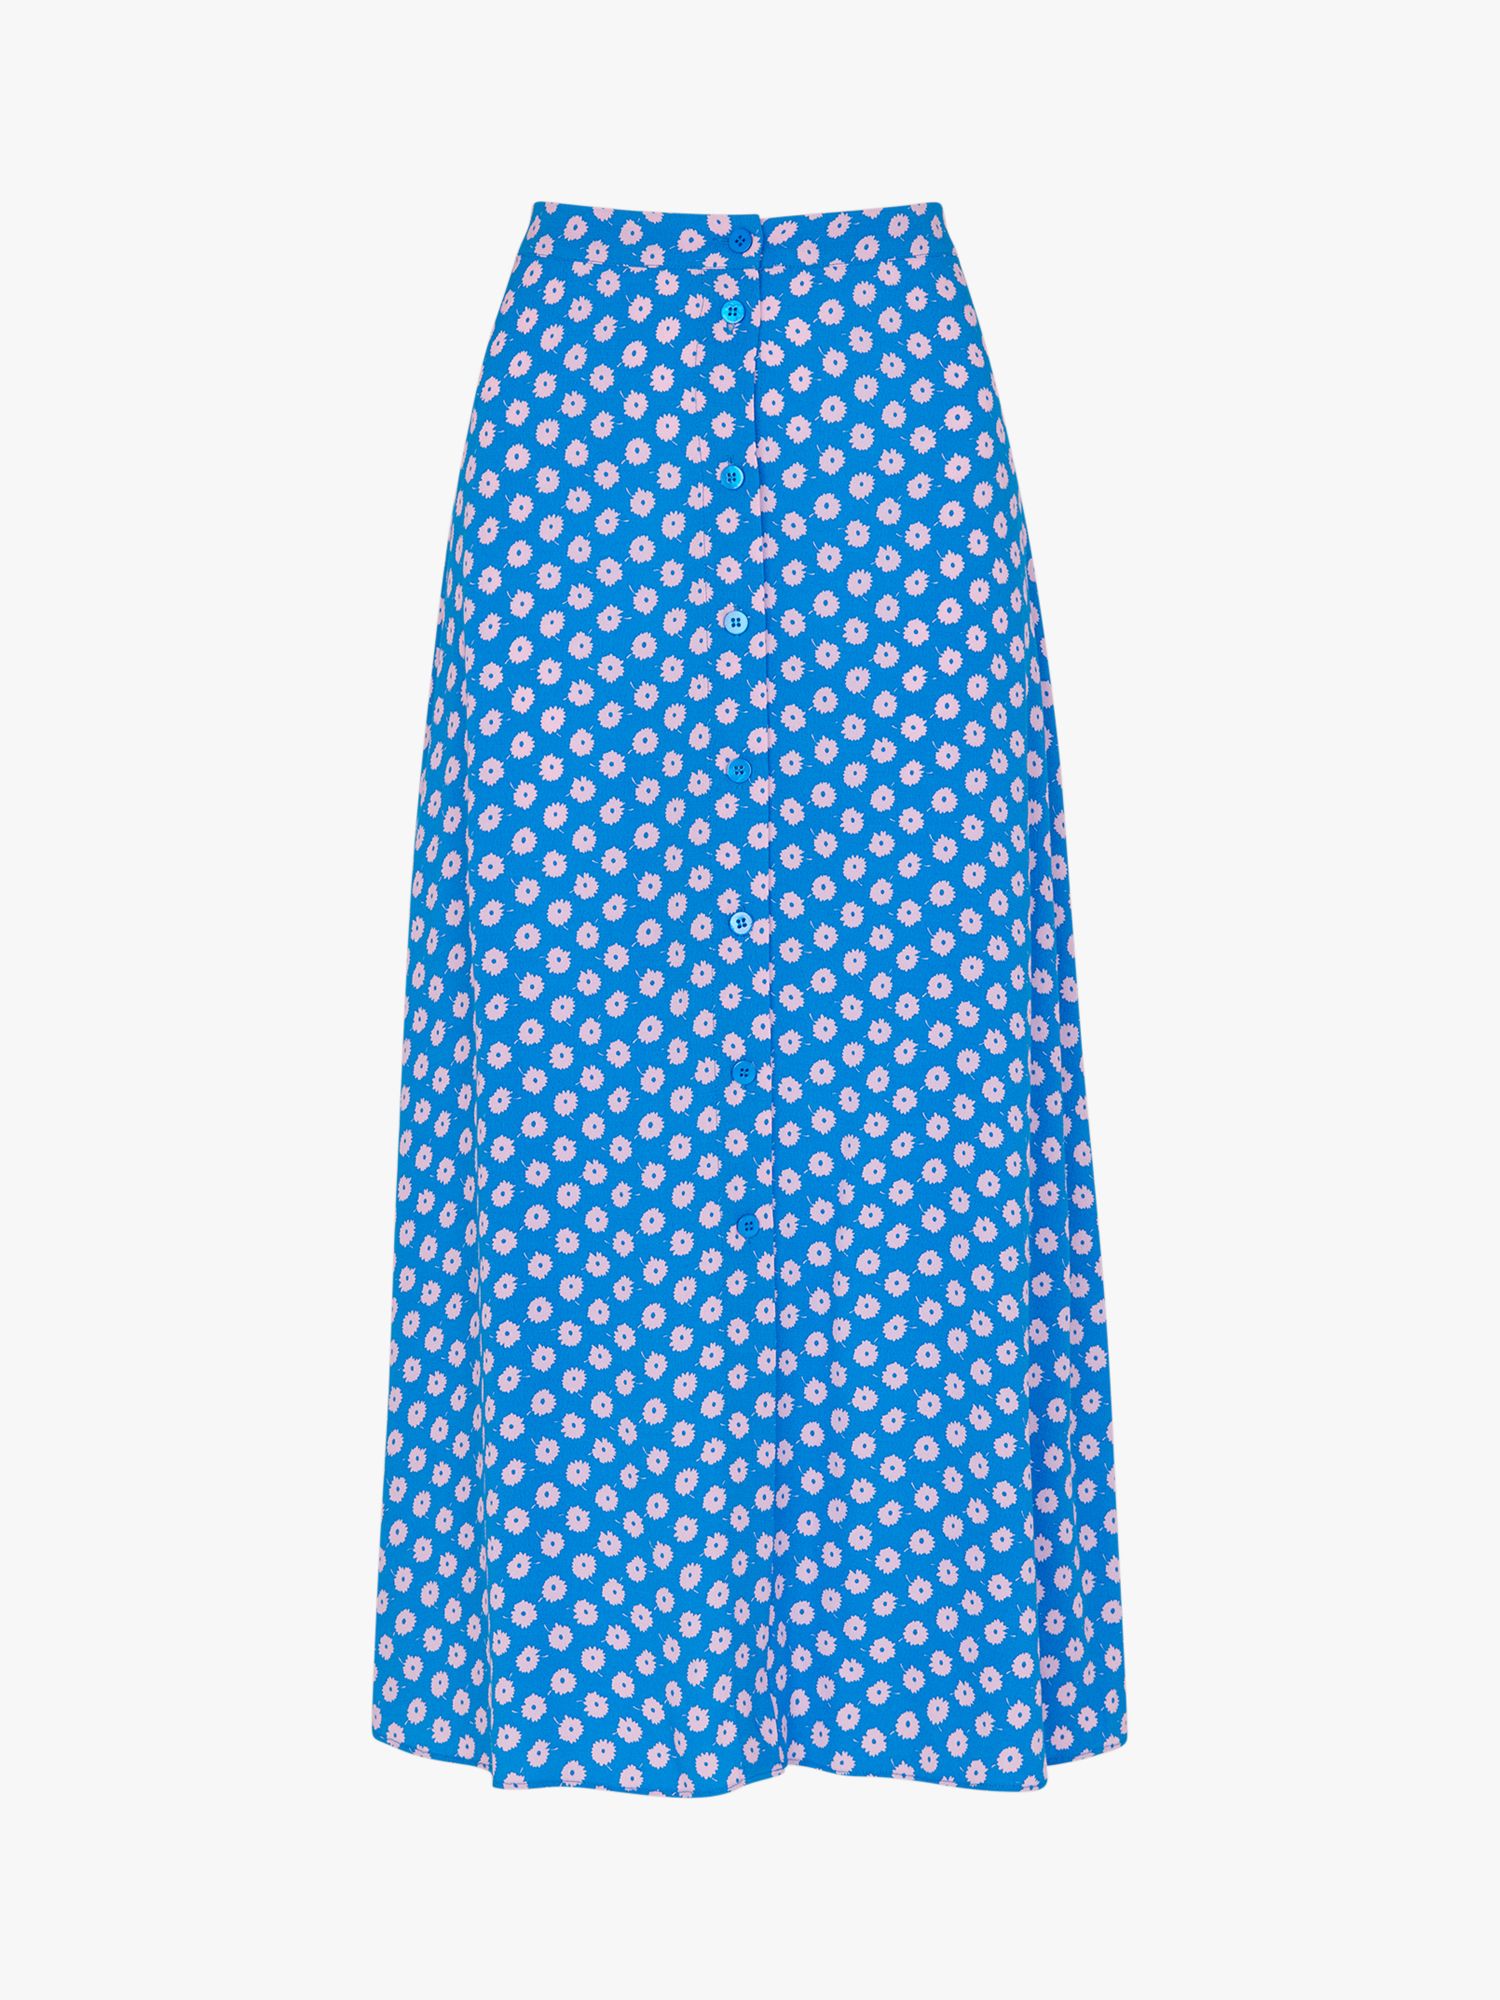 Whistles Floral Sunburst Midi Skirt, Blue/Multi at John Lewis & Partners